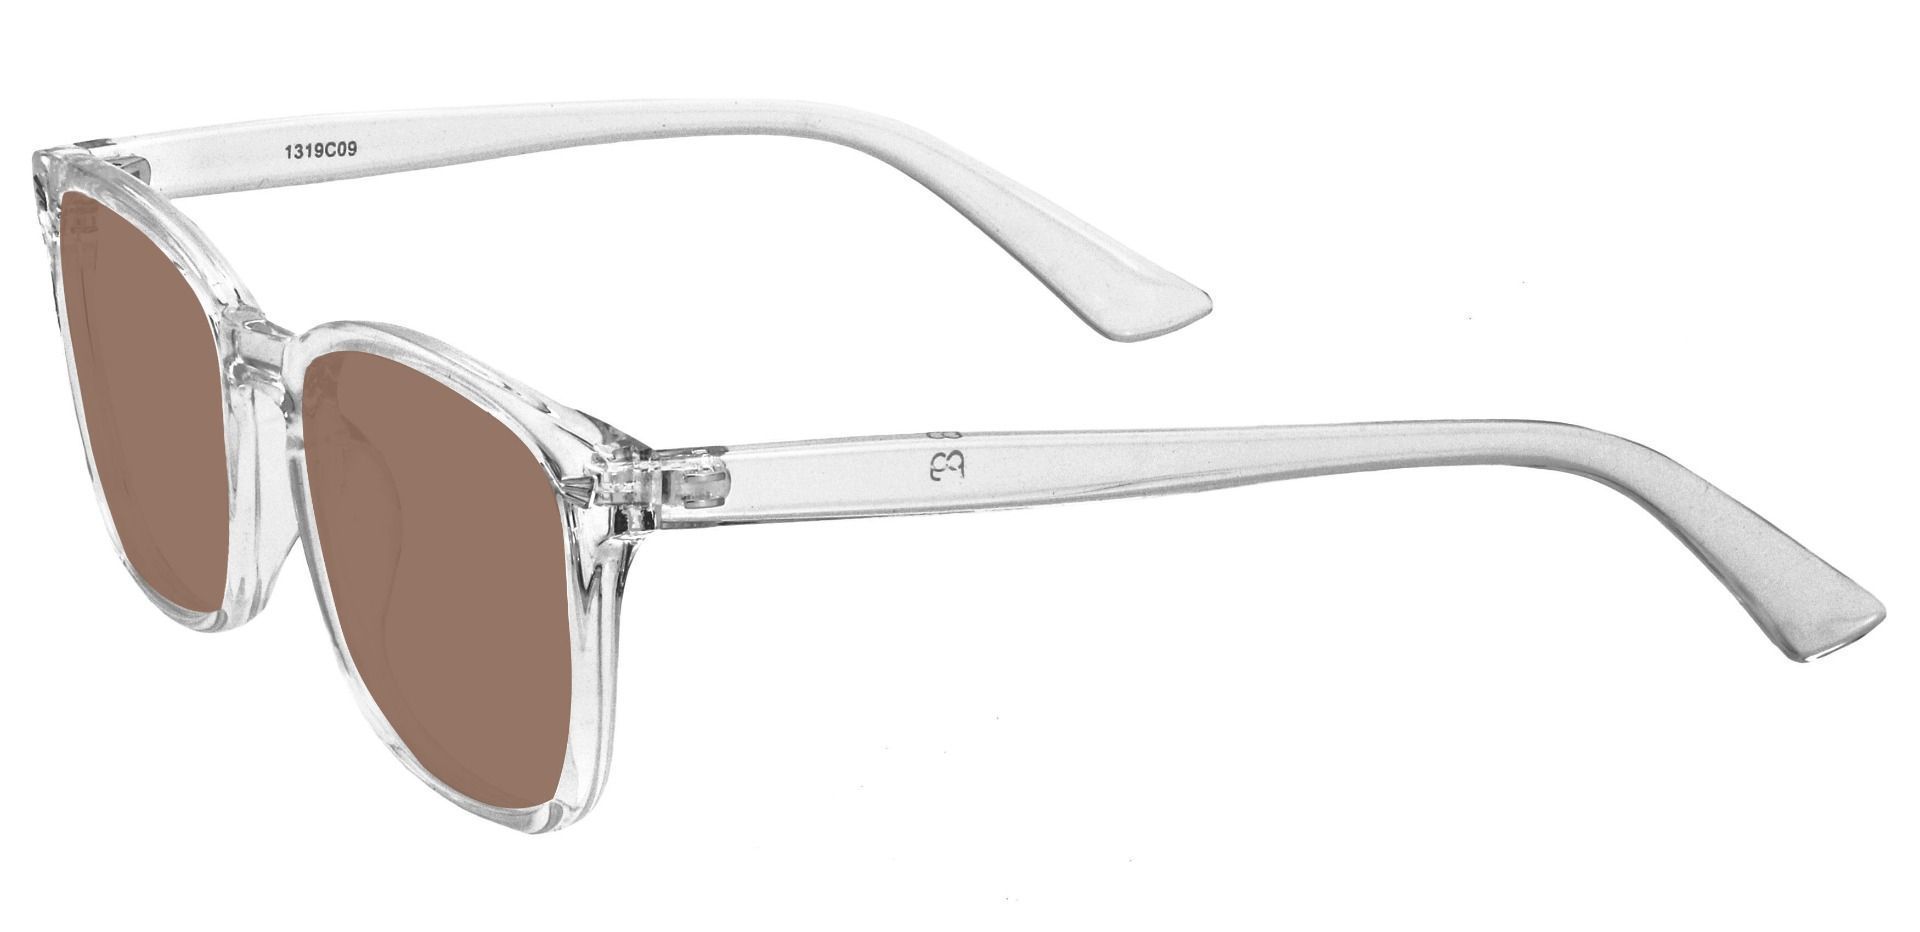 Rogan Square Progressive Sunglasses - Clear Frame With Brown Lenses